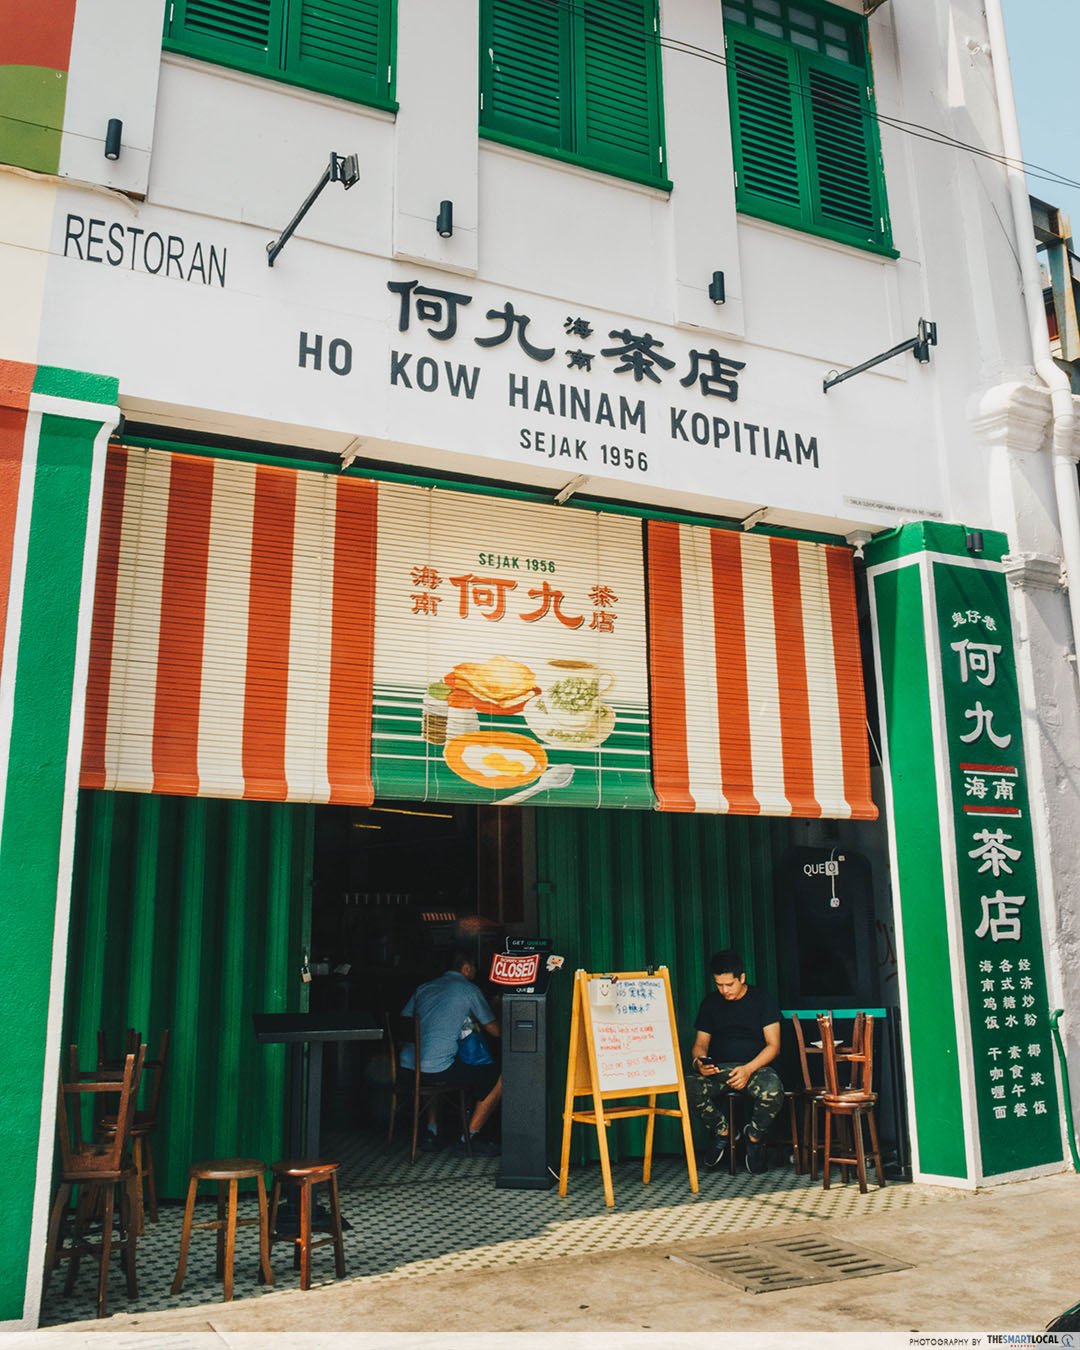 petaling street cafes - ho kow hainam